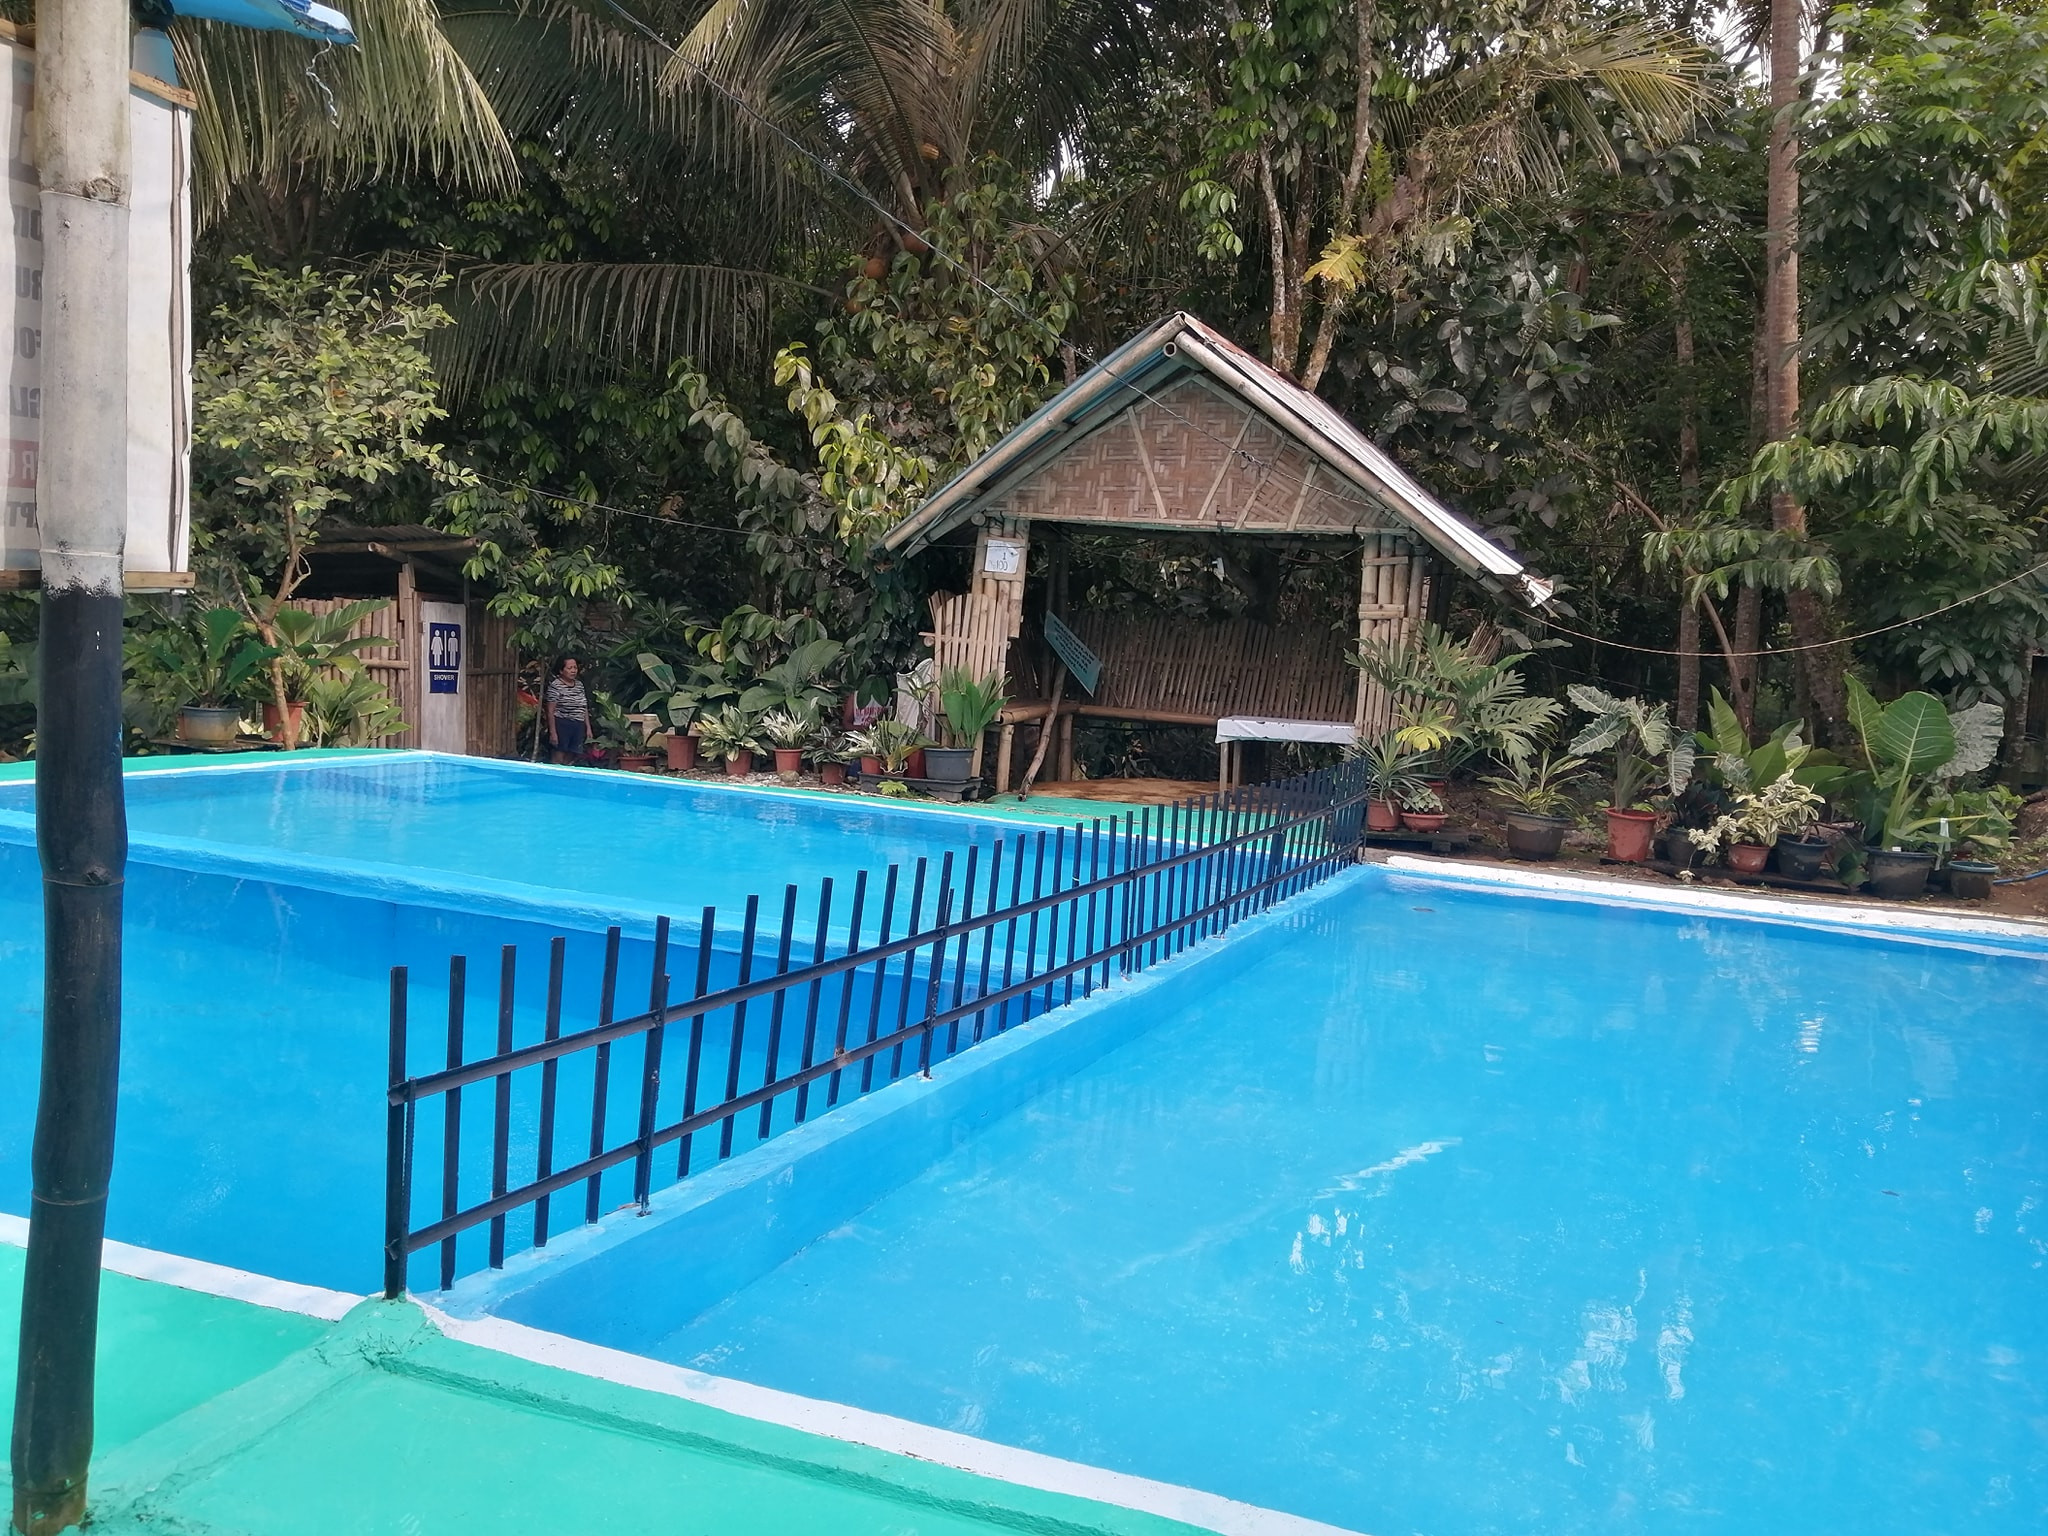 Balili Family Resort